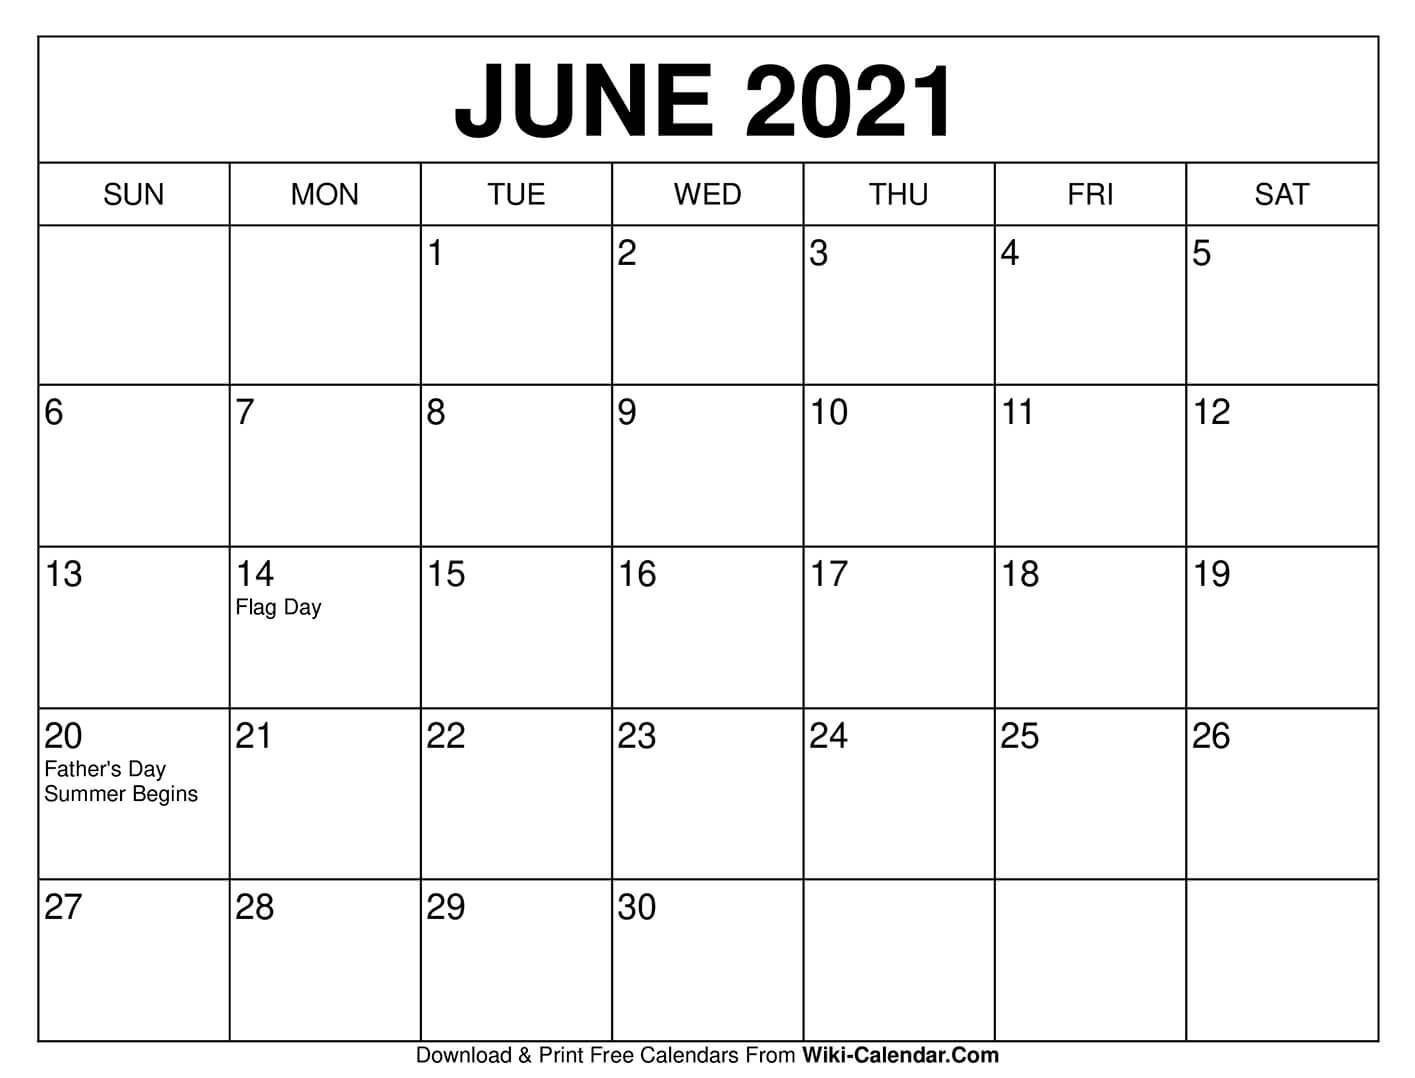 June 2021 Calendar In 2020 | Calendar Template, Calendar